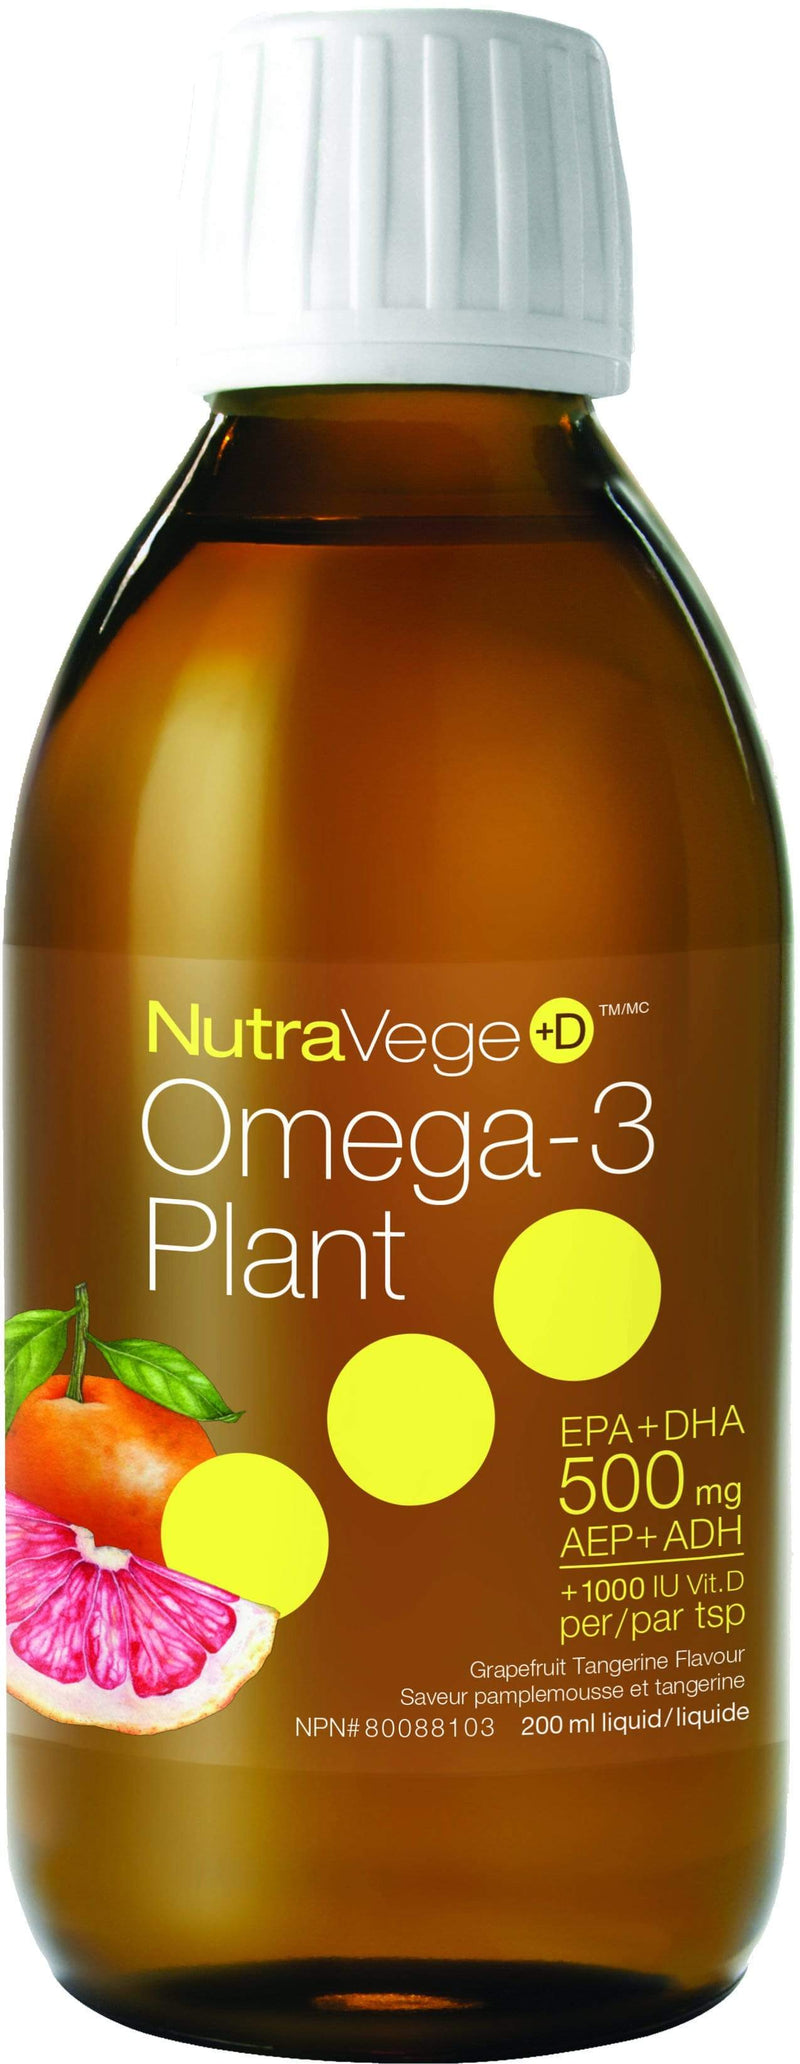 NutraVege+D نبات أوميغا 3 + فيتامين د - الجريب فروت واليوسفي (200 مل)